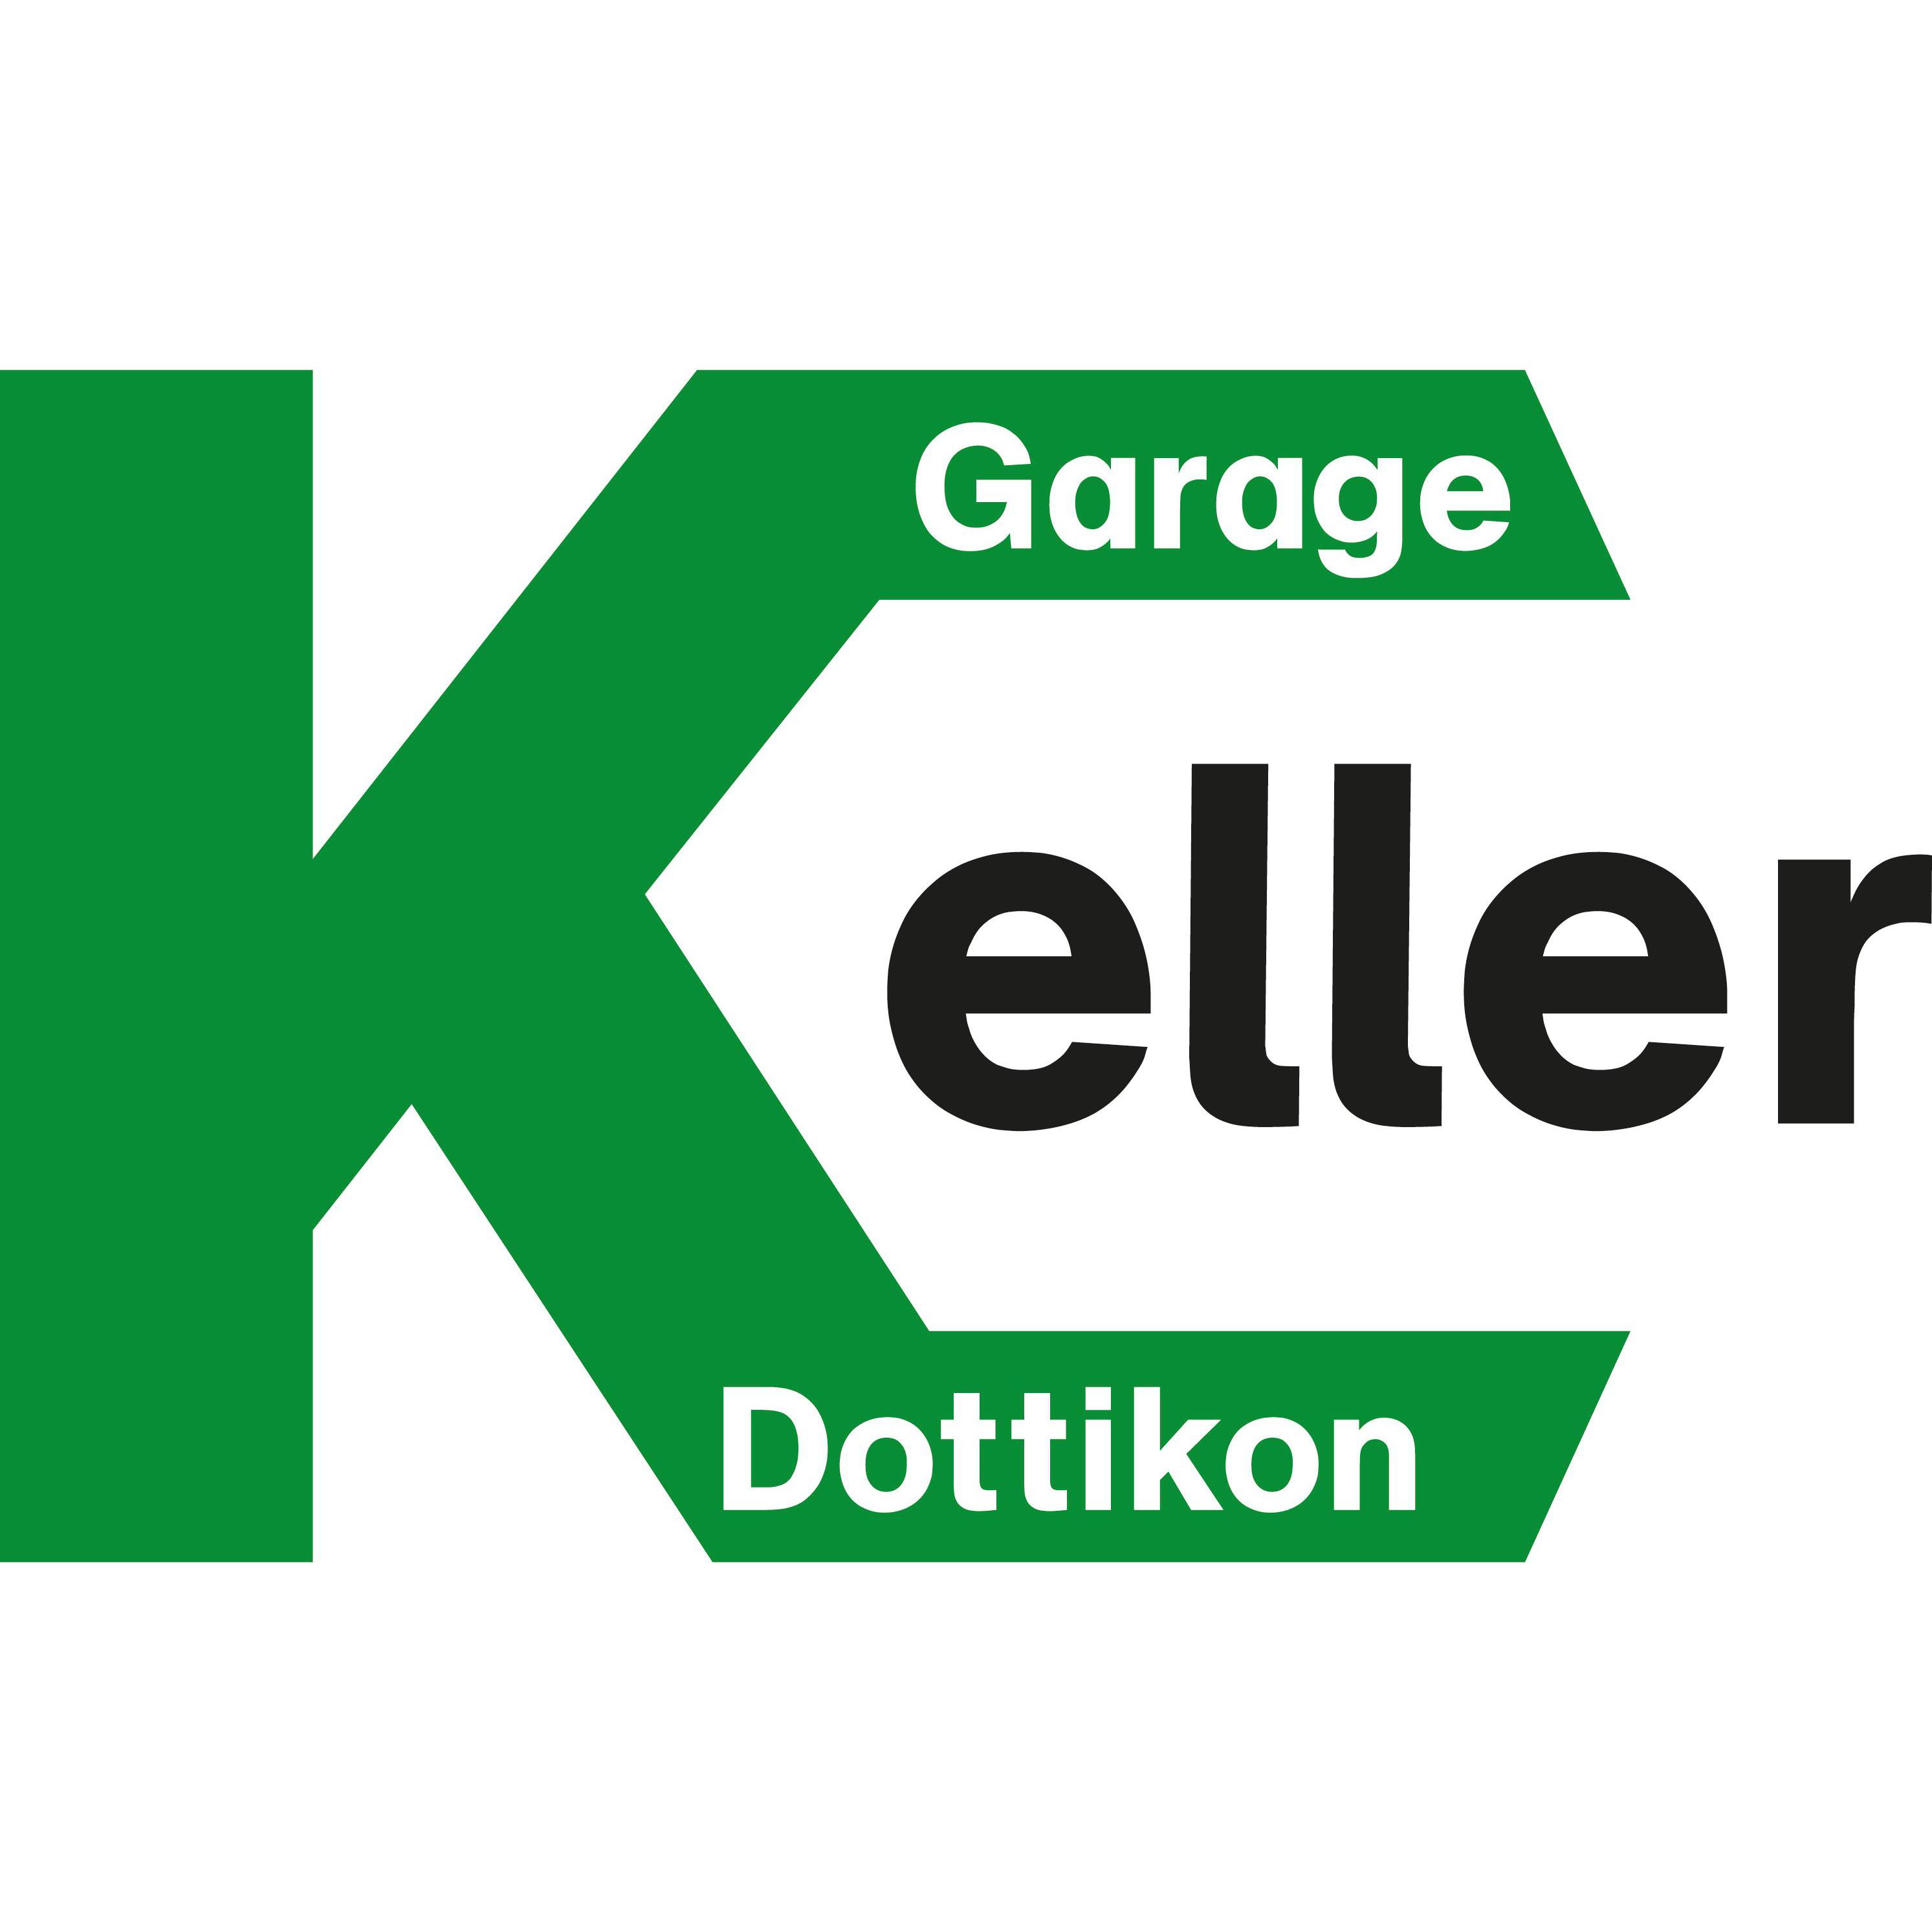 Garage Keller GmbH, Dottikon Logo